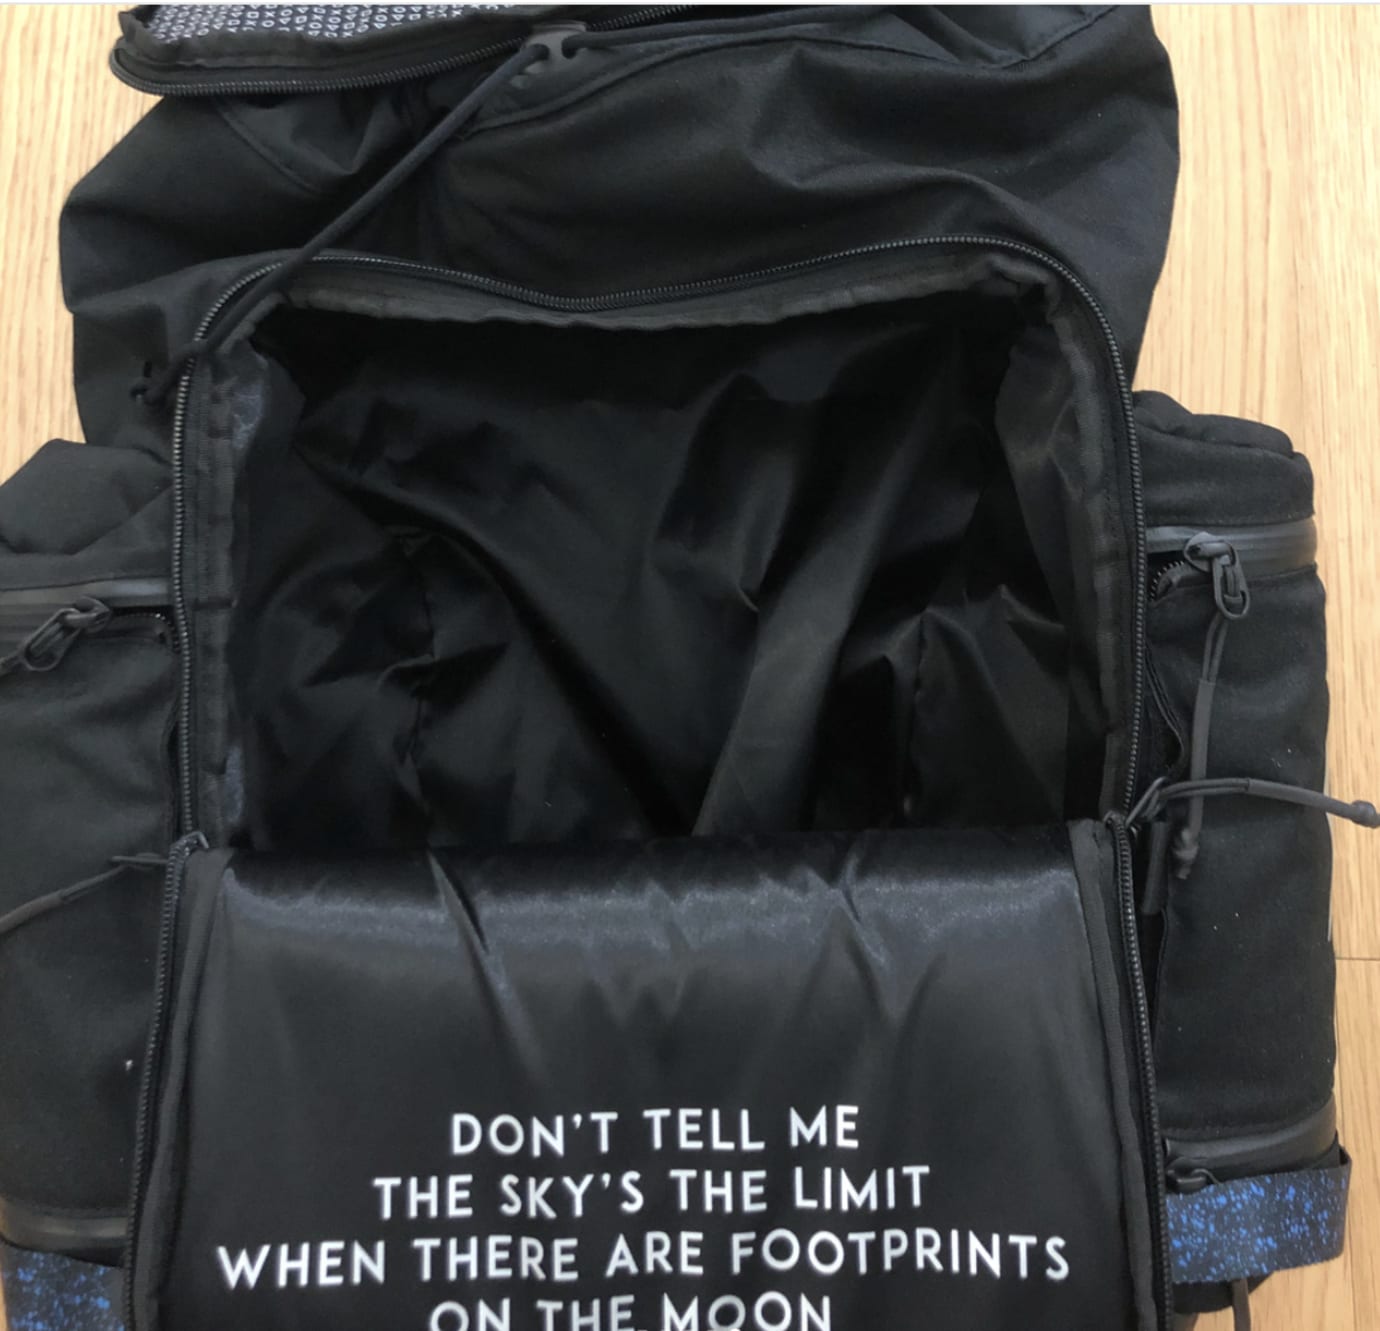 pg2 playstation backpack